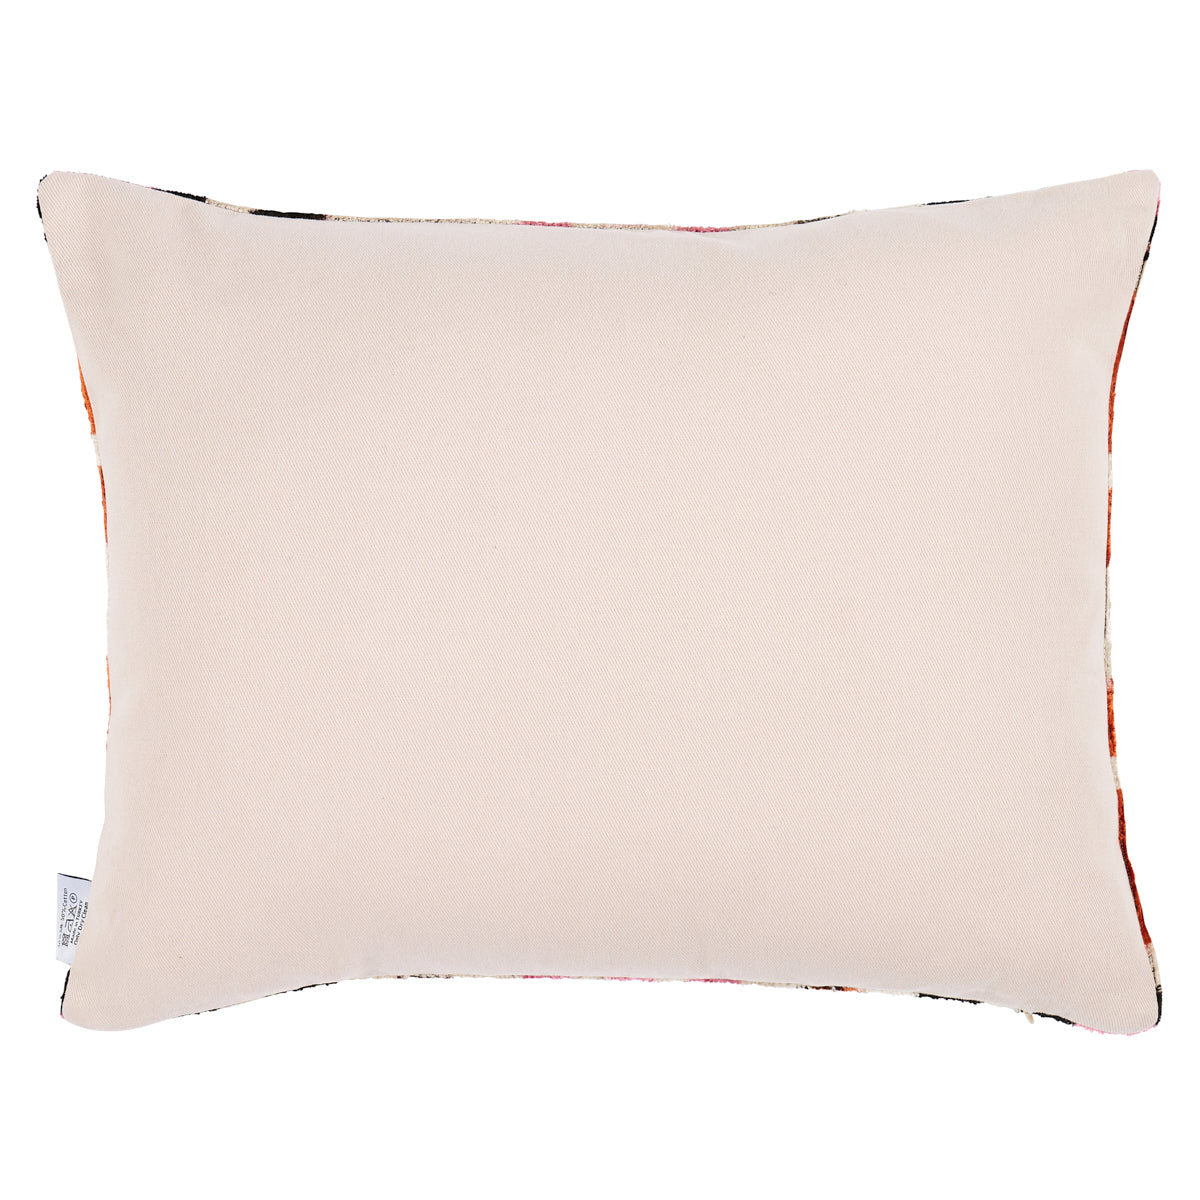 Adana Silk Velvet Pillow | Pink & Orange